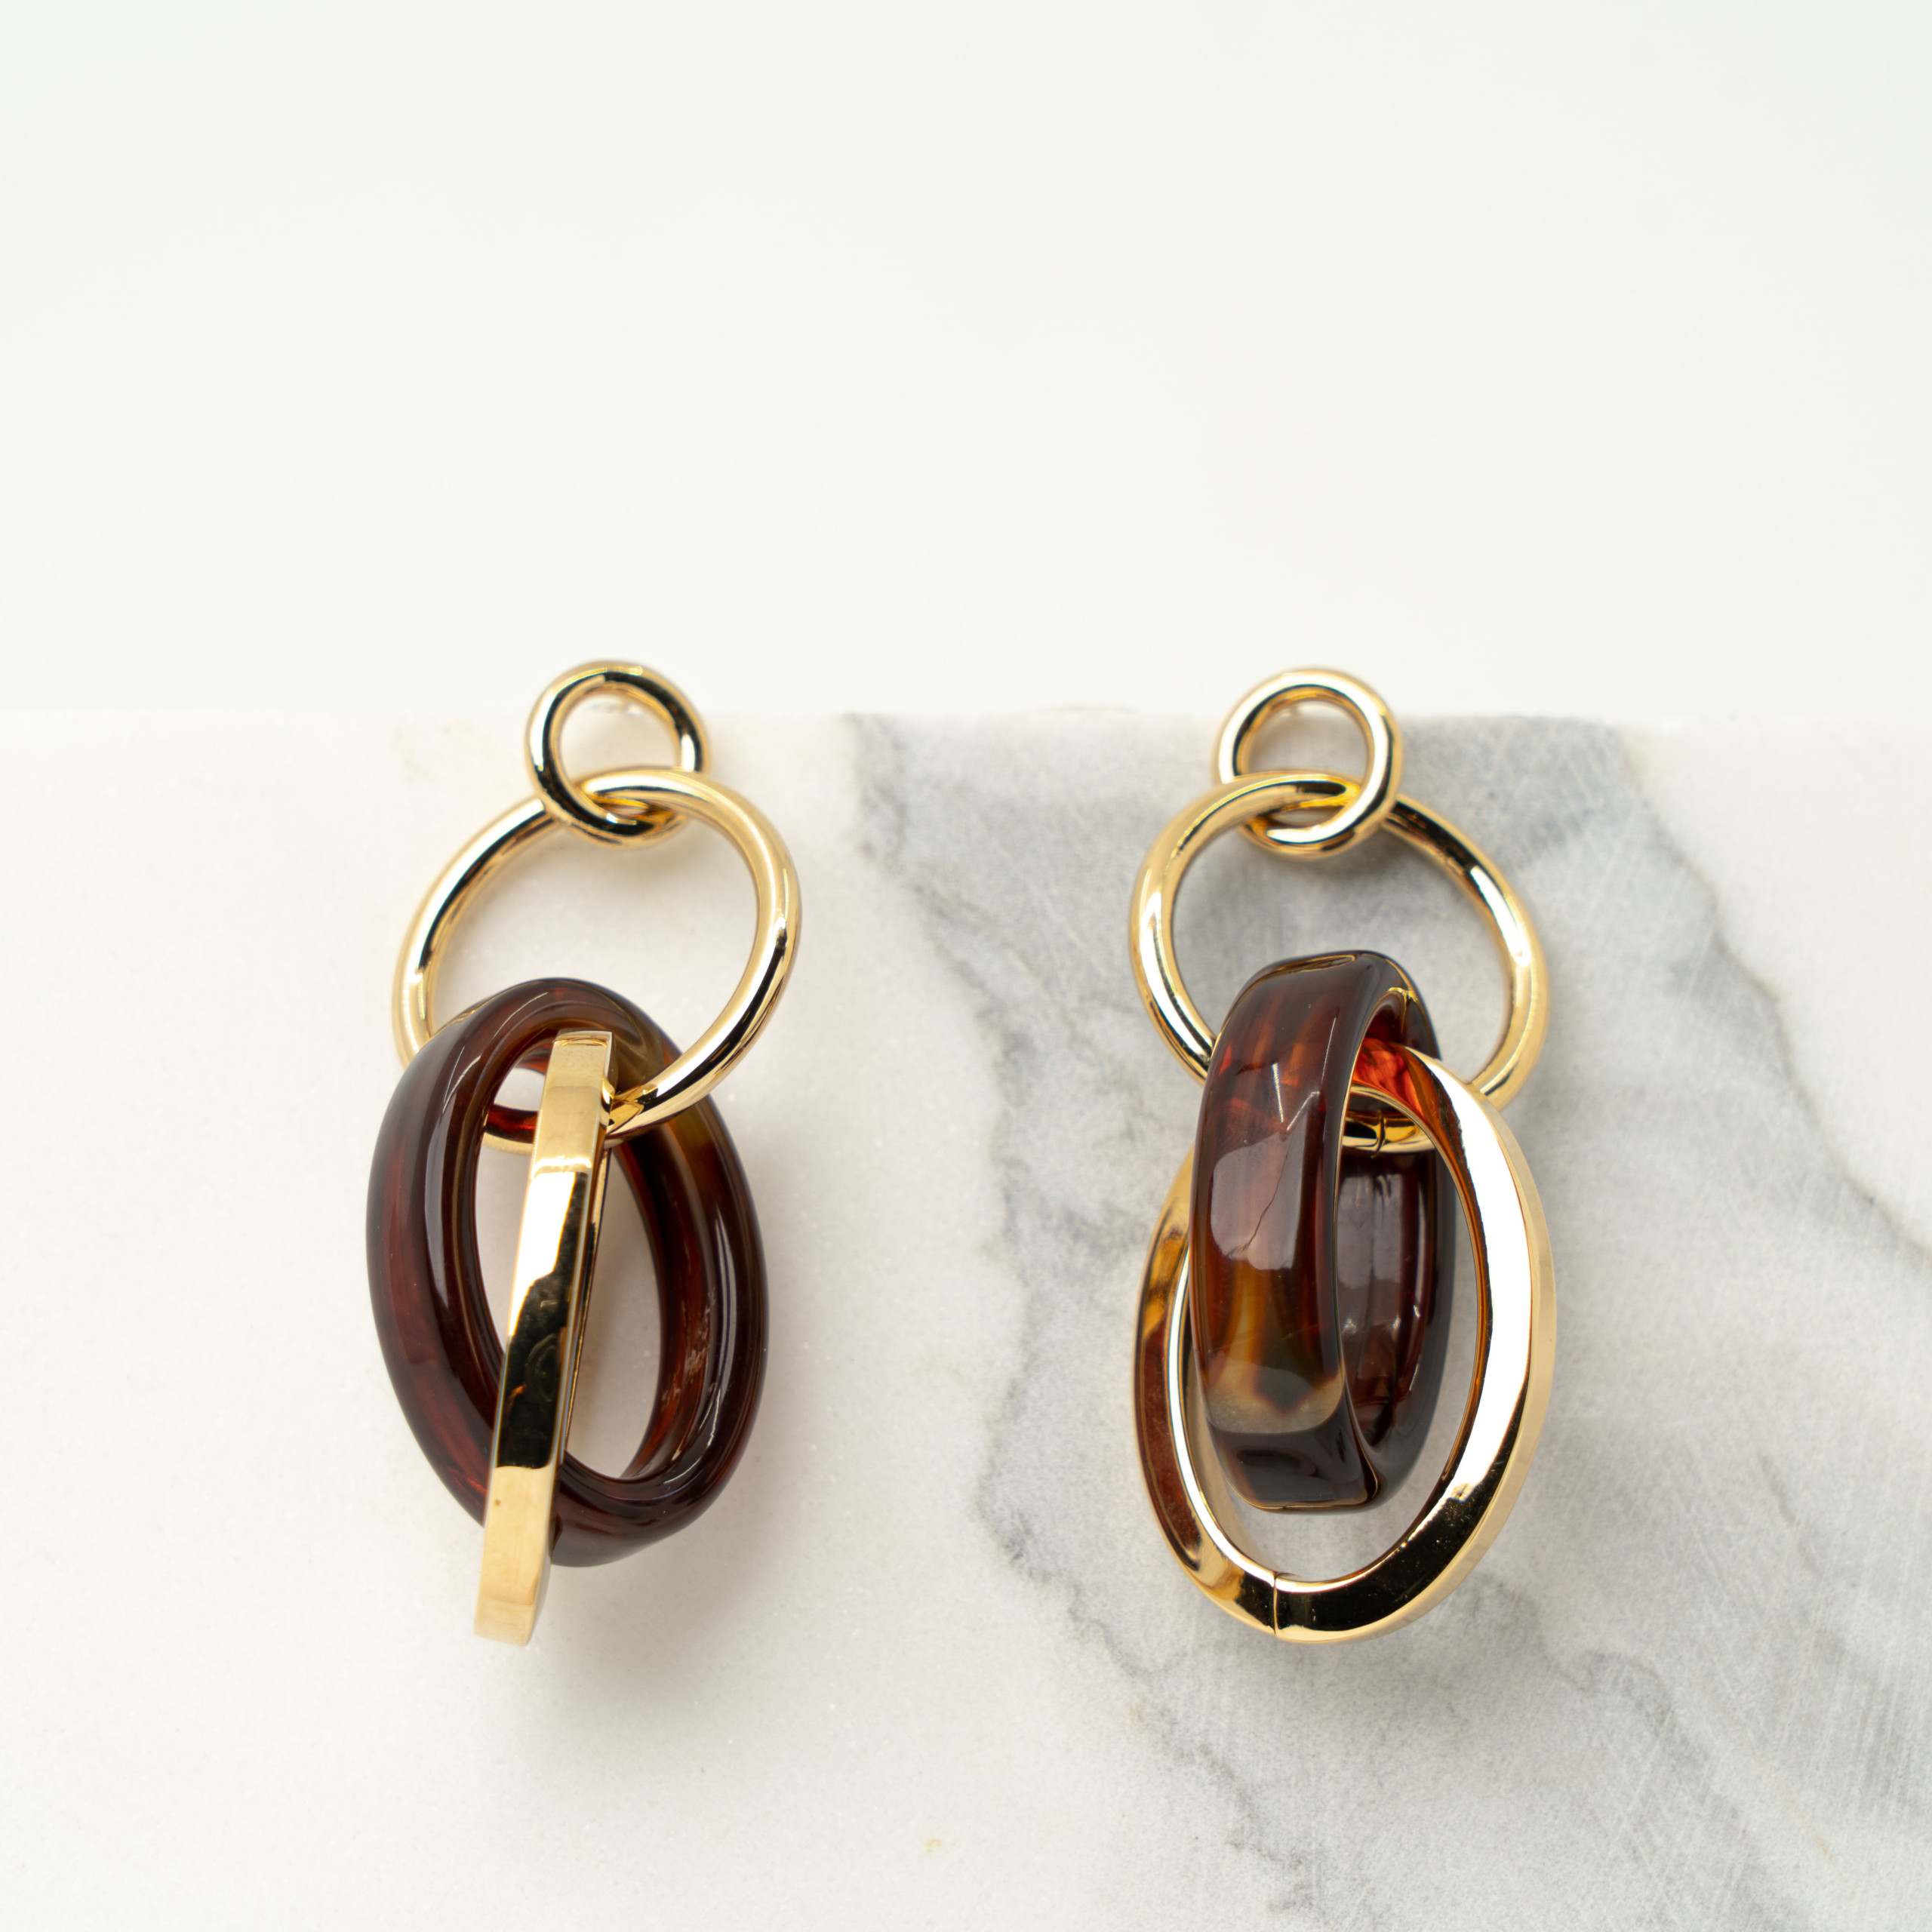 Allegra dark brown gold earrings